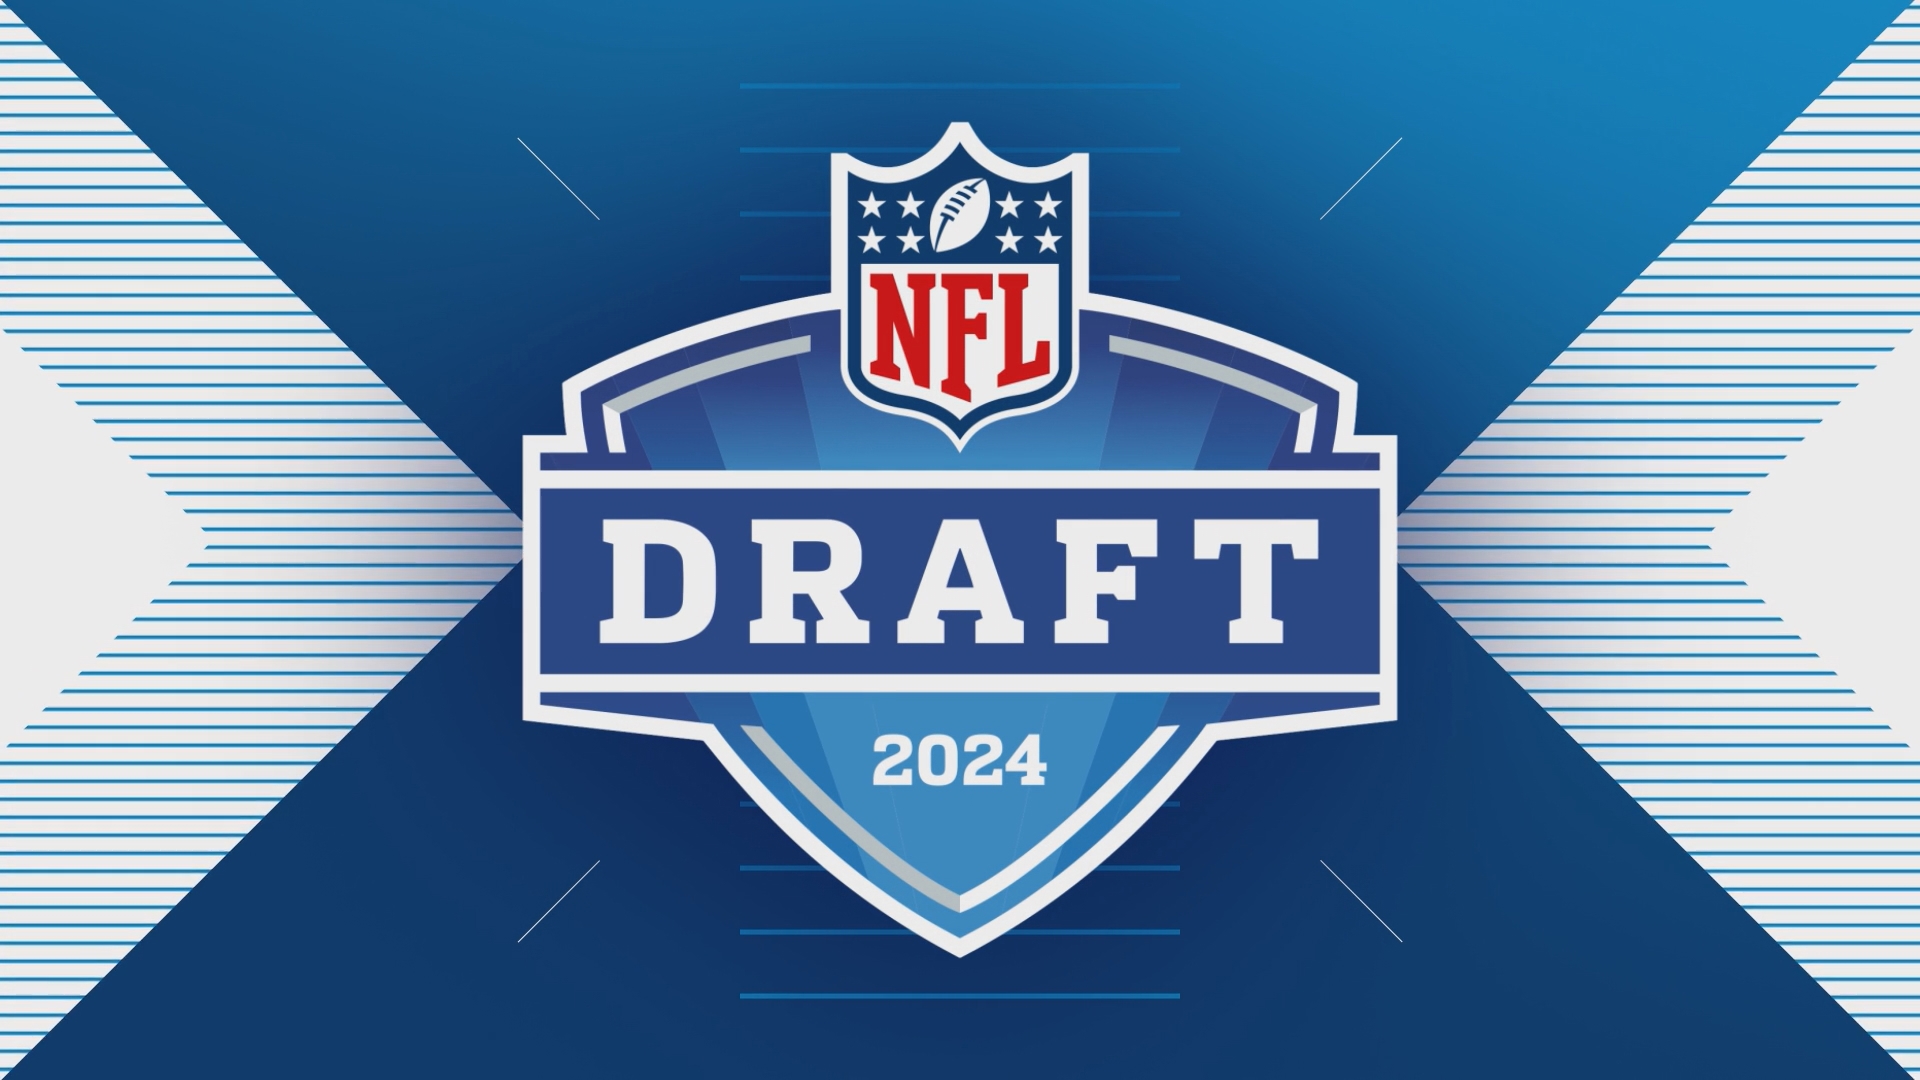 Get a full recap of the 2024 NFL Draft.